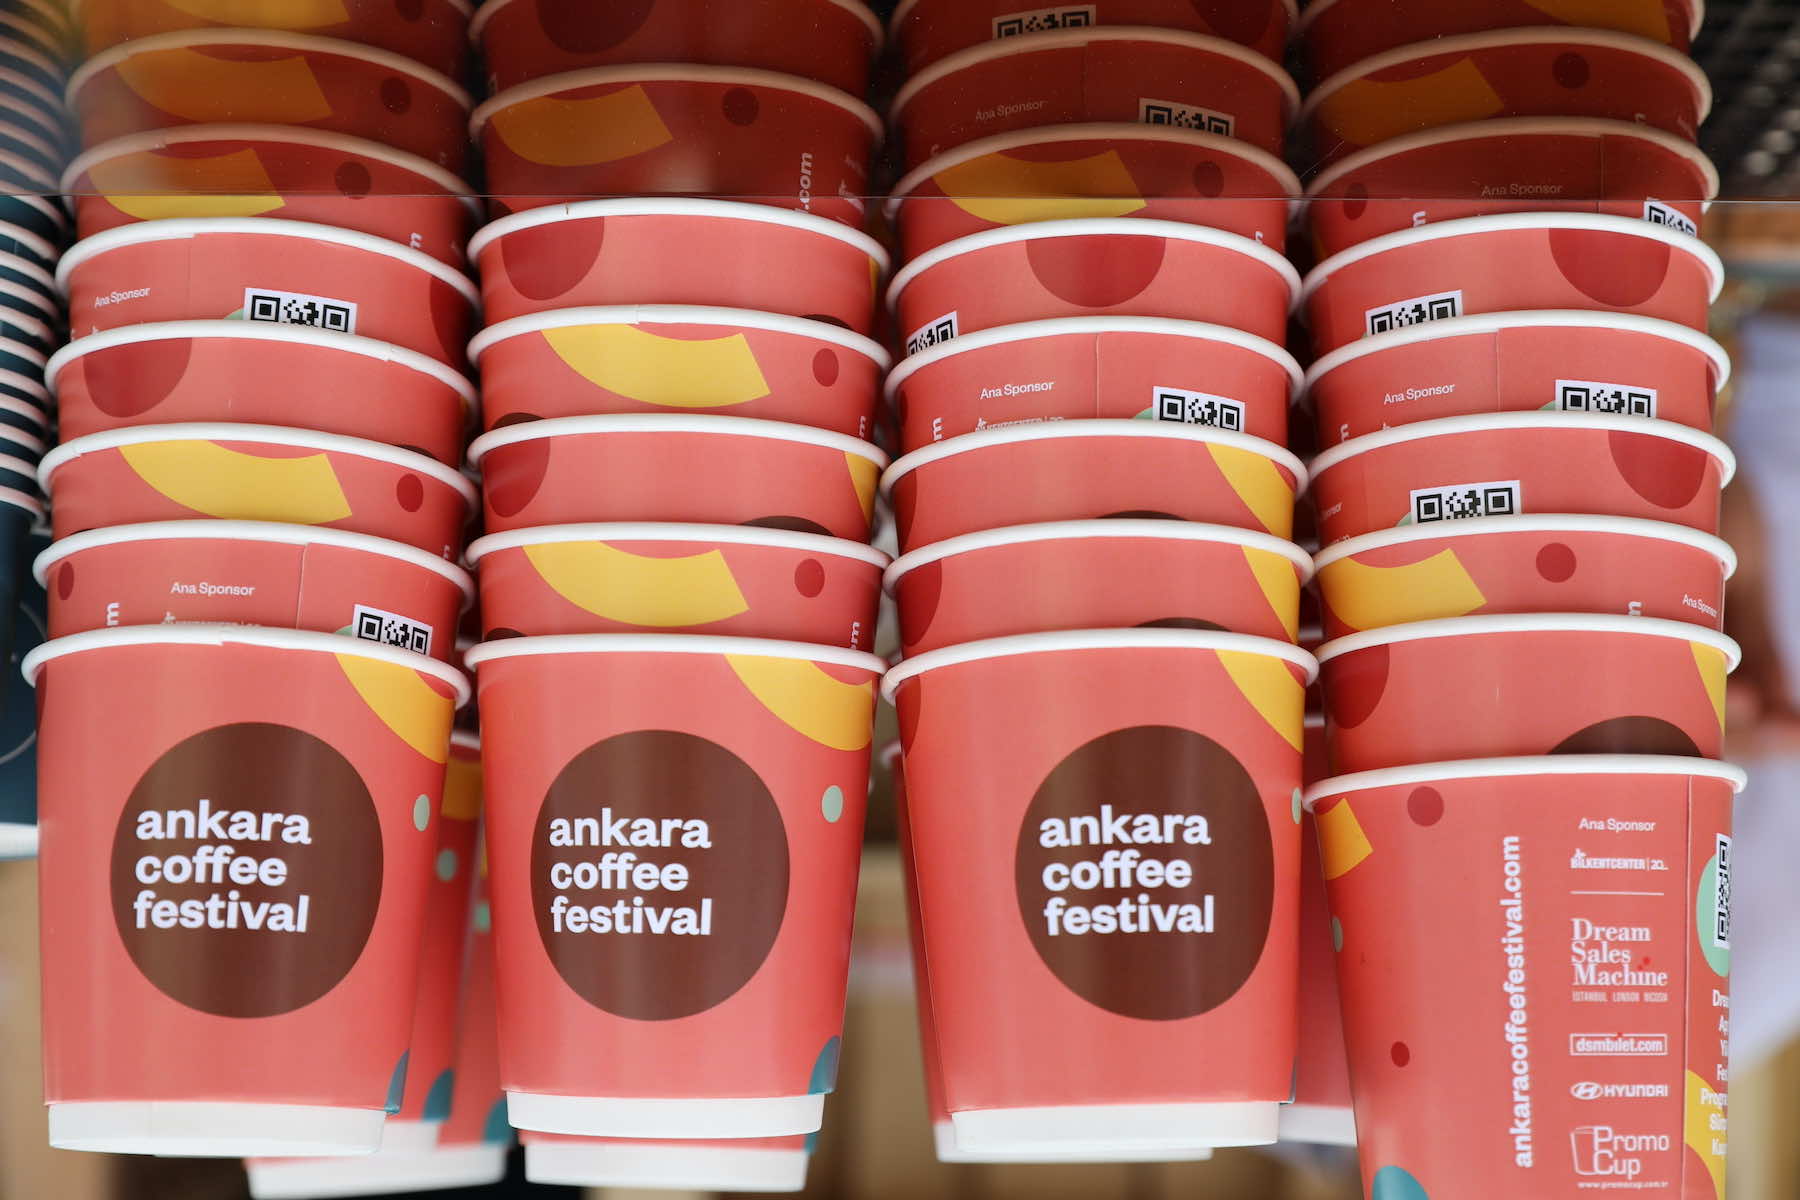 Ankara Coffee Festival